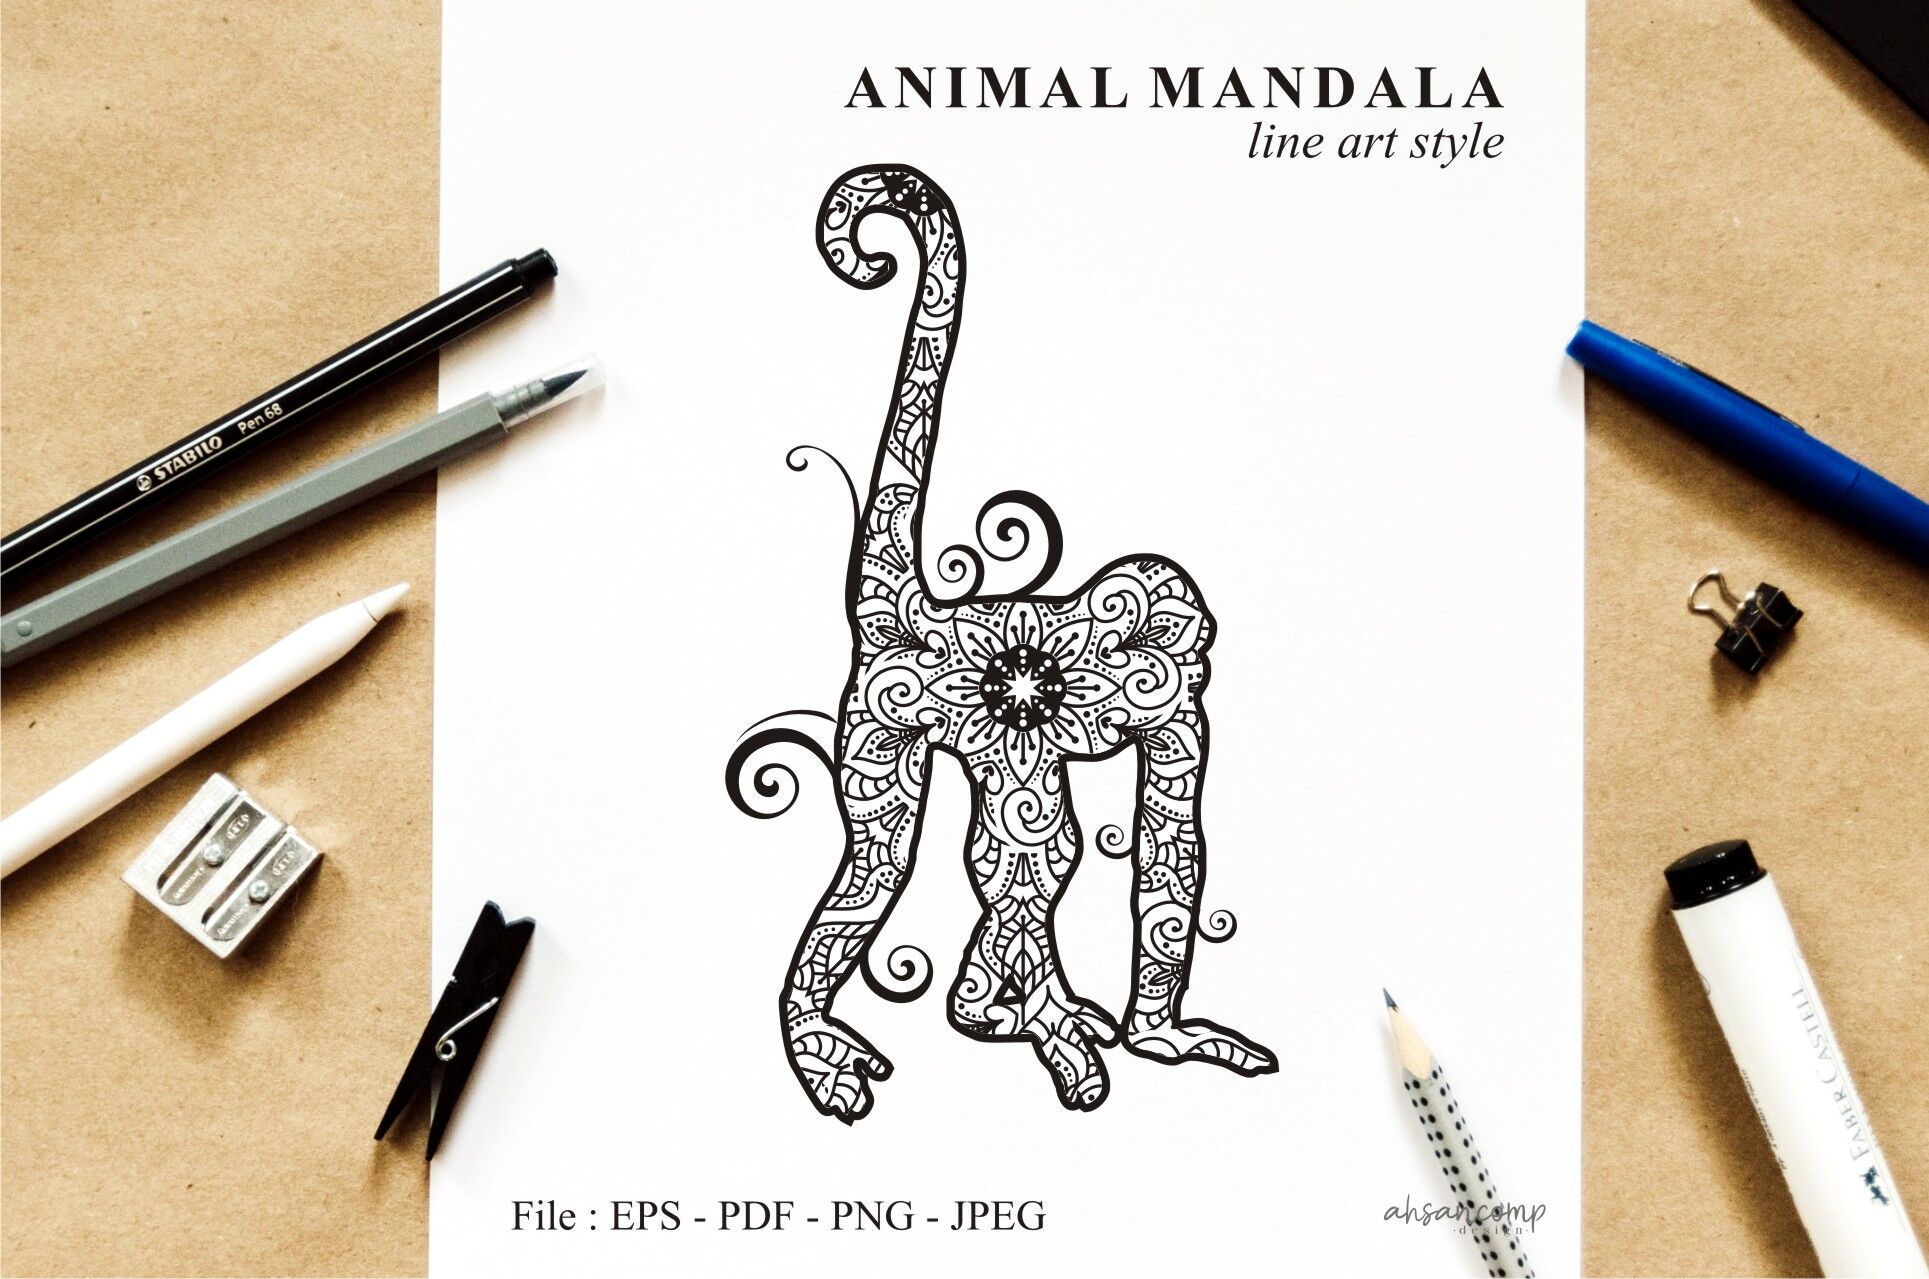 Download Monkey Mandala Vector Line Art Style 03 By Ahsancomp ...